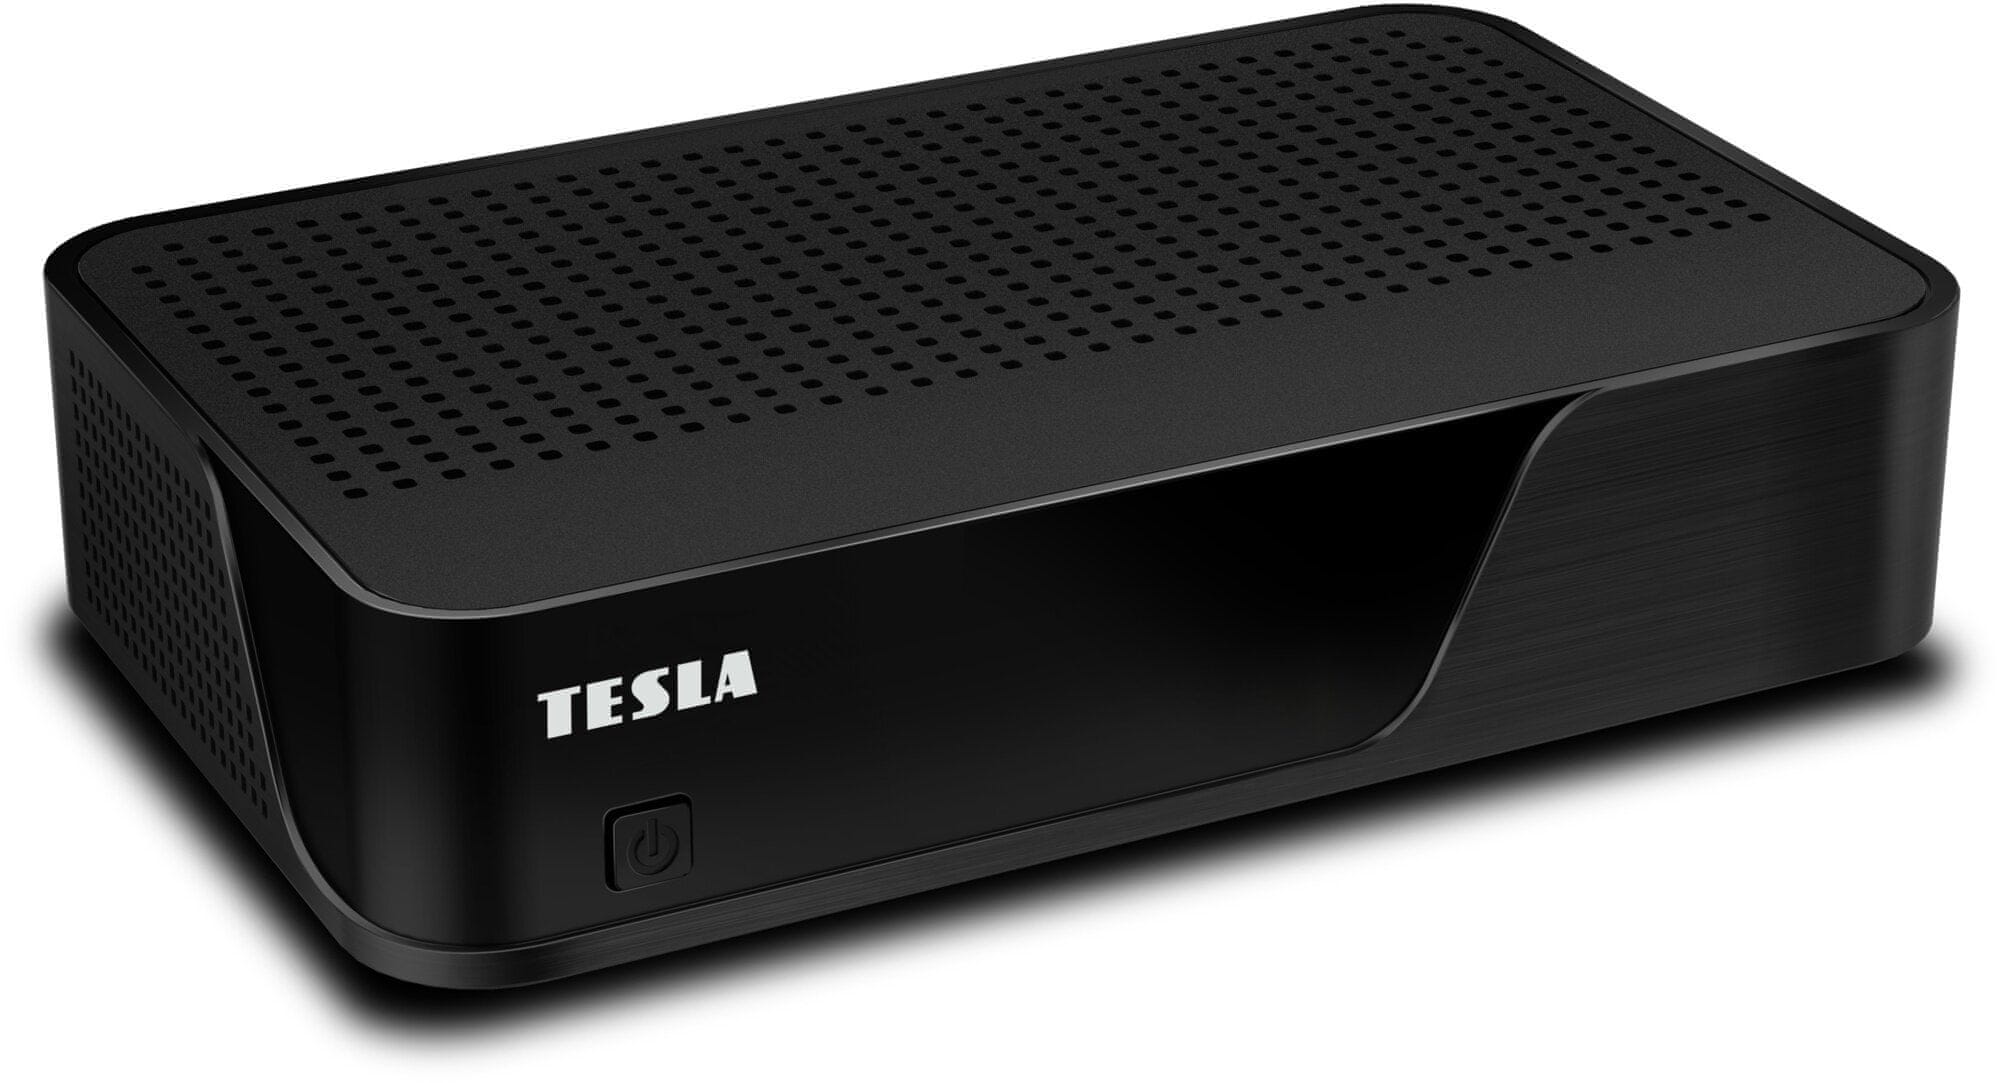 TESLA HYbbRID TV T200 - mando a distancia de reemplazo - $14.7